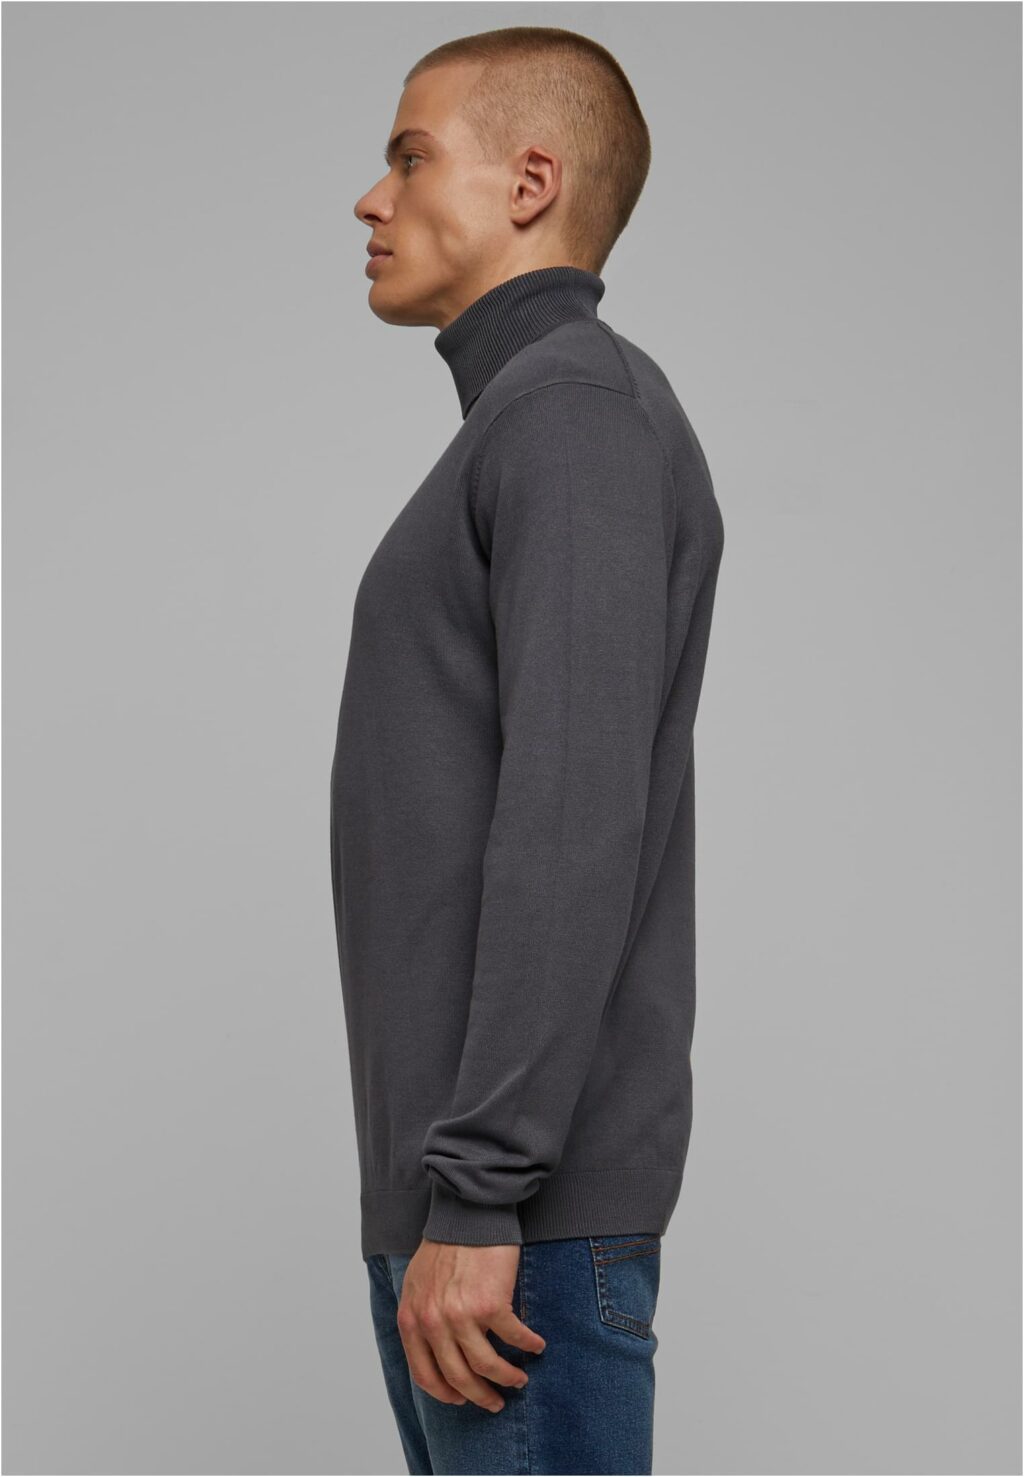 Urban Classics Knitted Turtleneck Sweater darkgrey TB6360